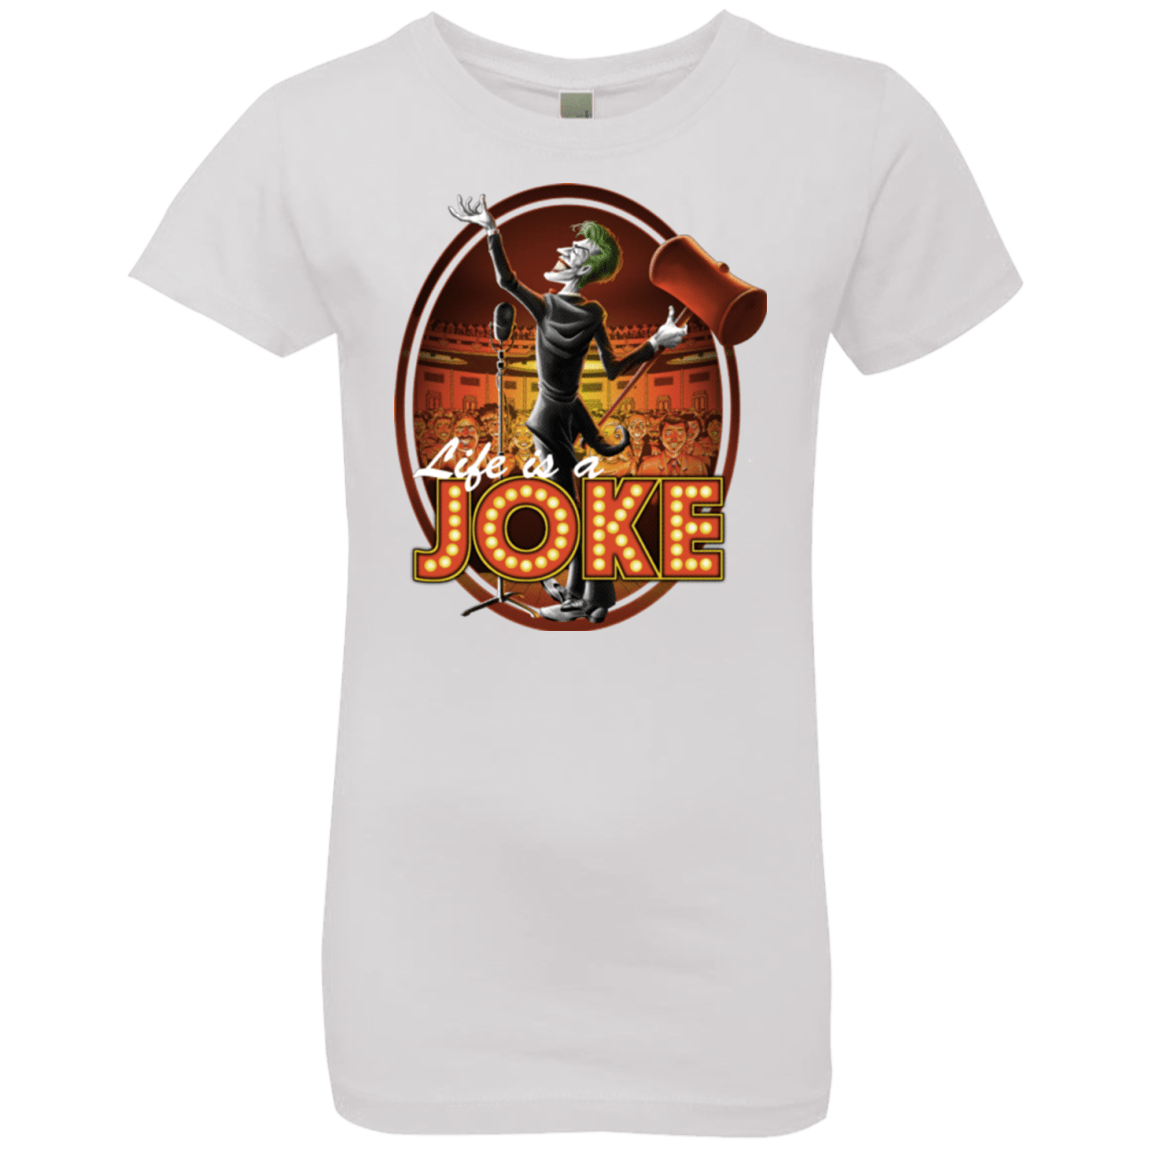 Life Is A Joke Girls Premium T-Shirt